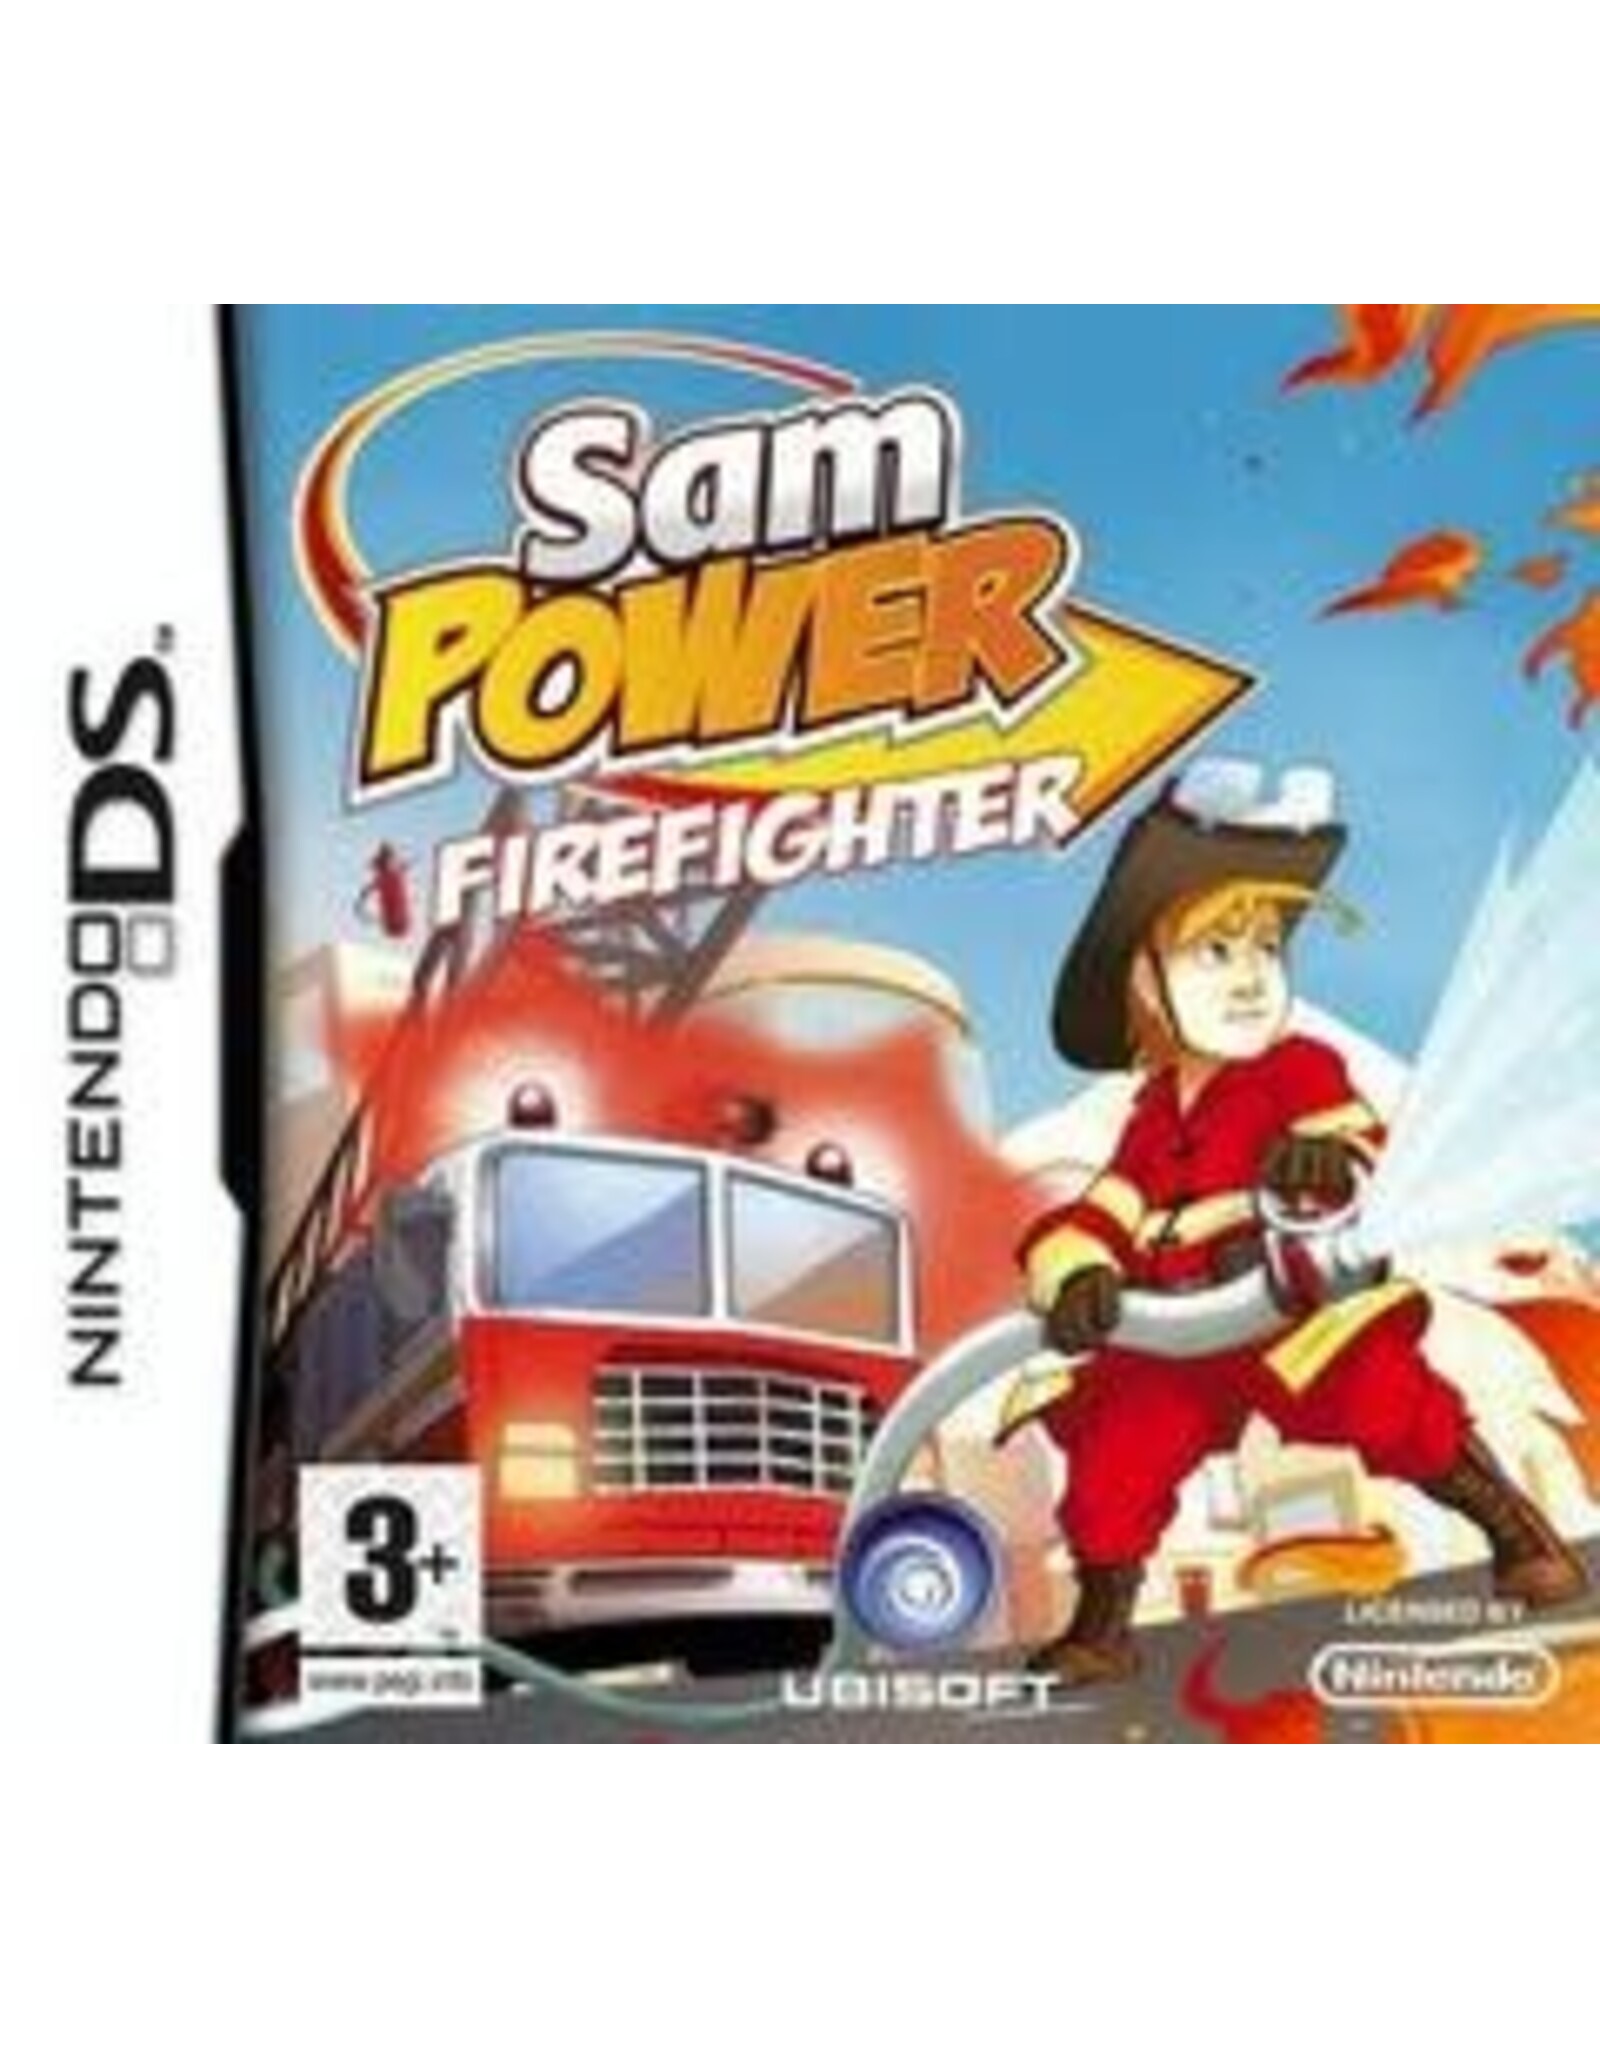 Nintendo DS Sam Power Firefighter (Cart Only, PAL Import)